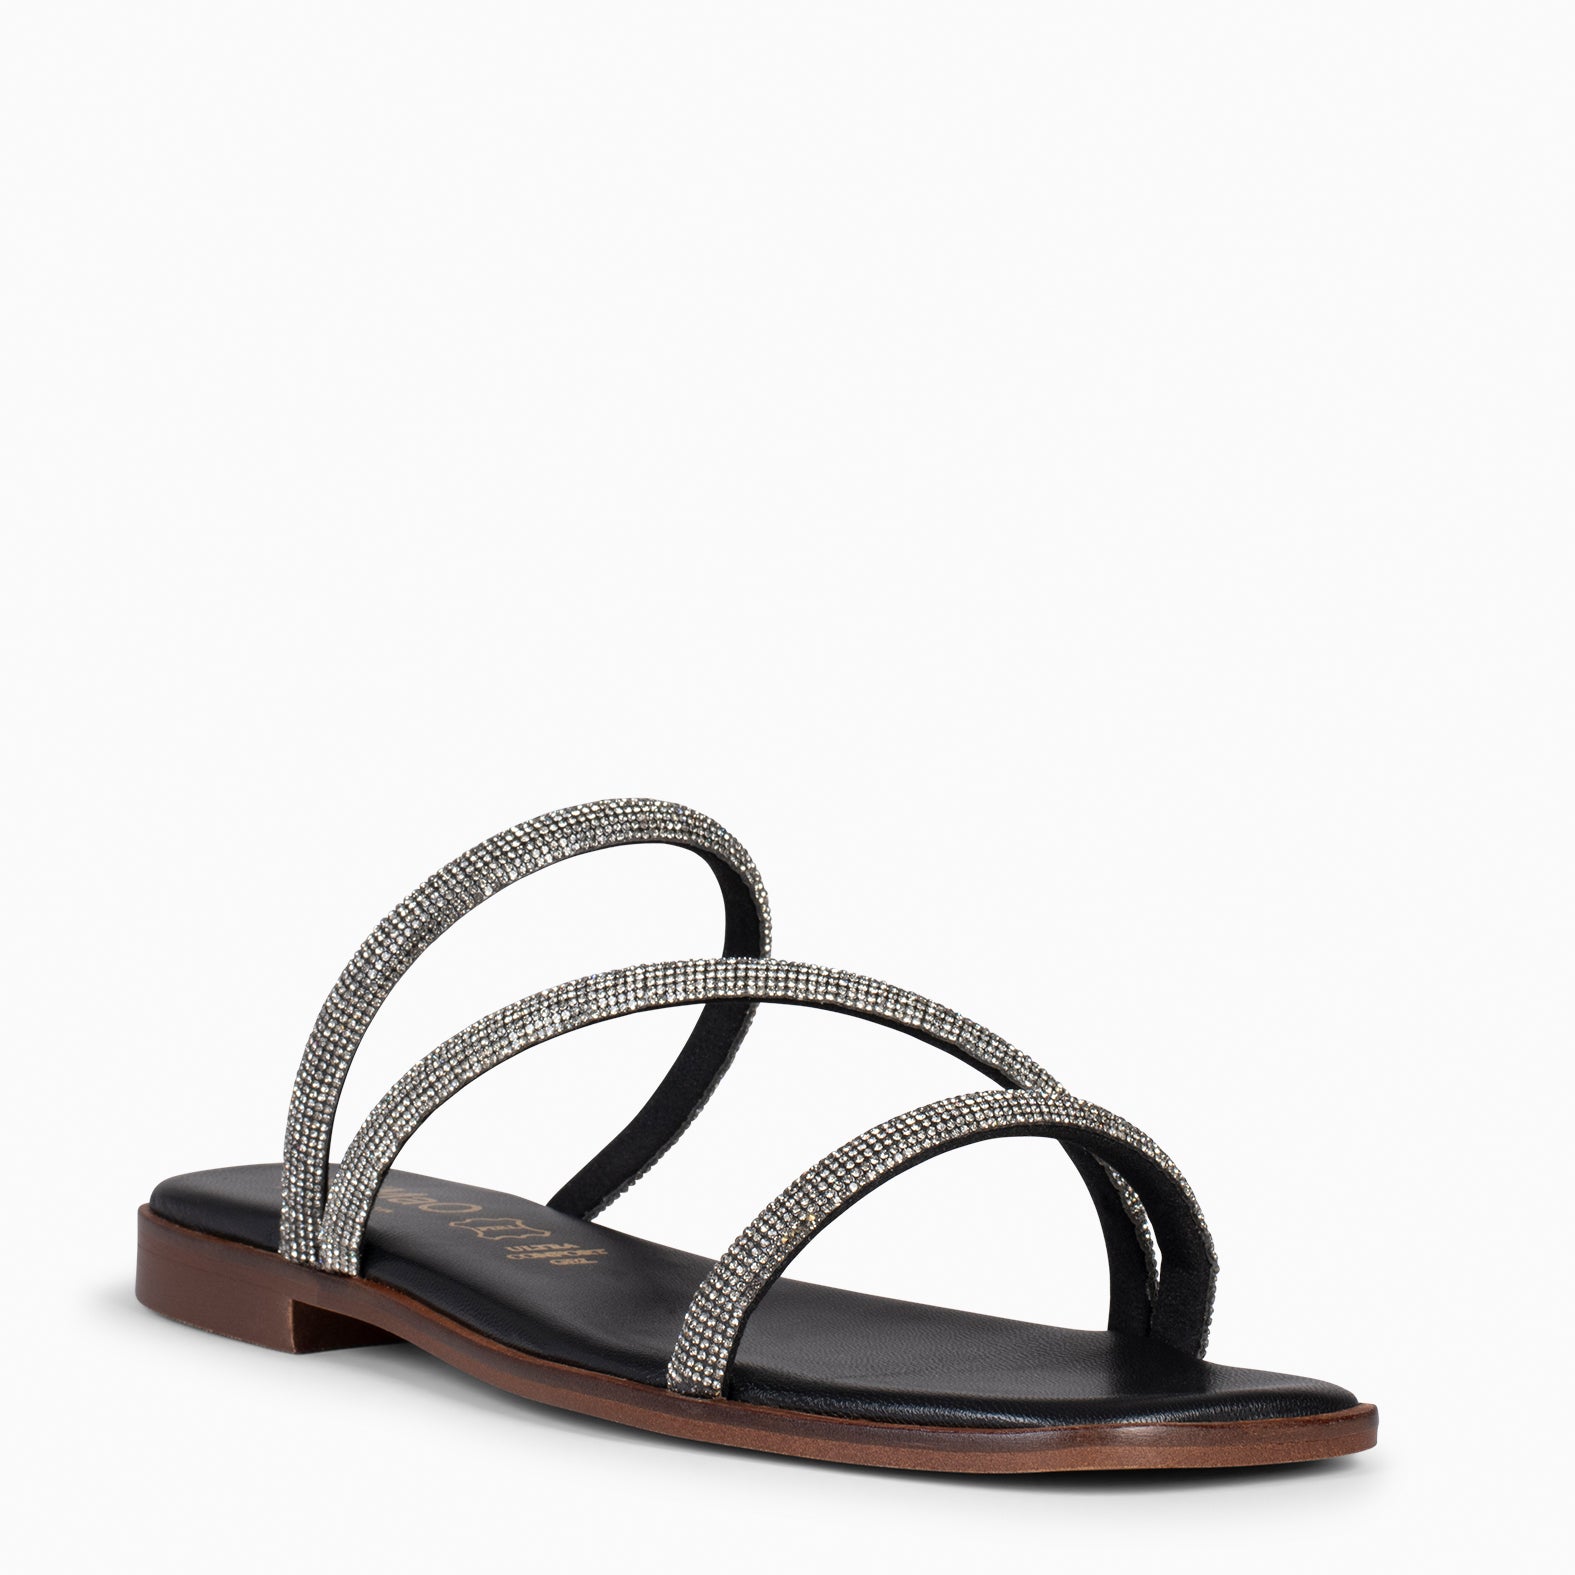 TALLIN - BLACK Flat Sandals with strass straps